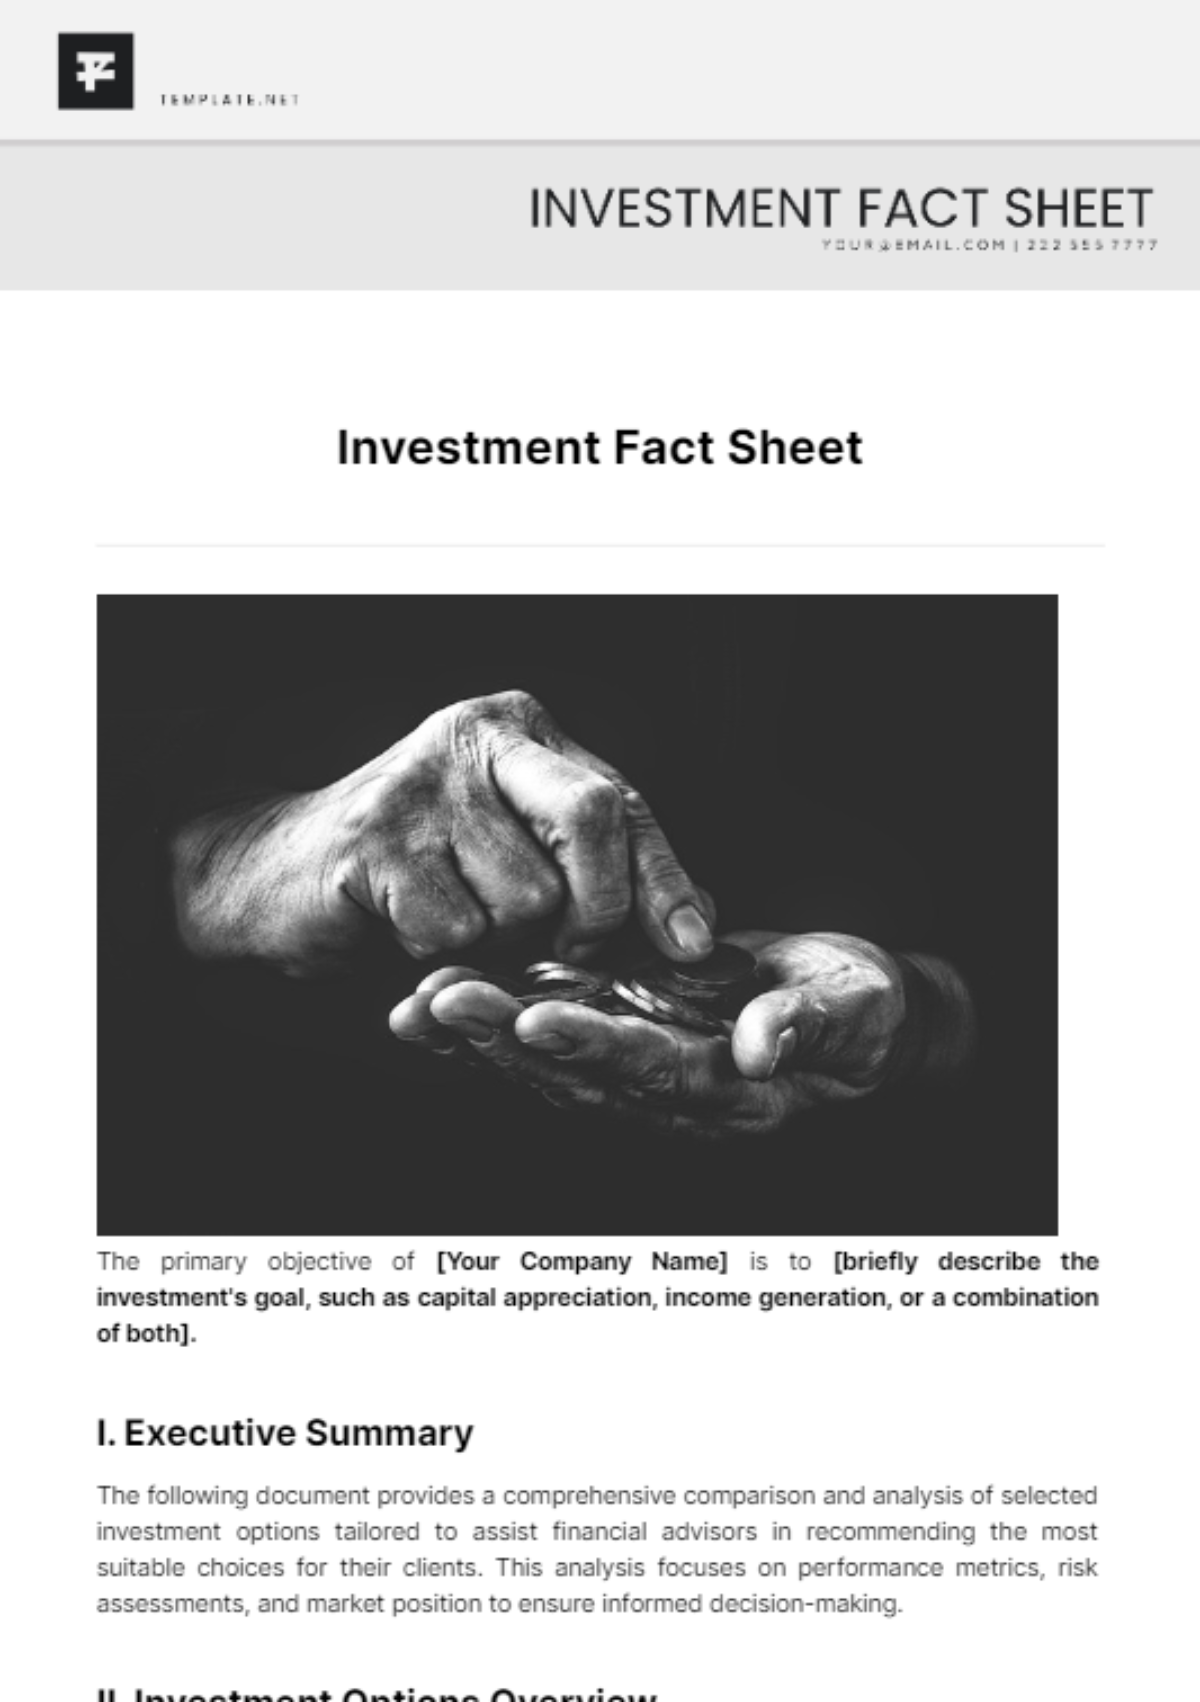 Investment Fact Sheet Template